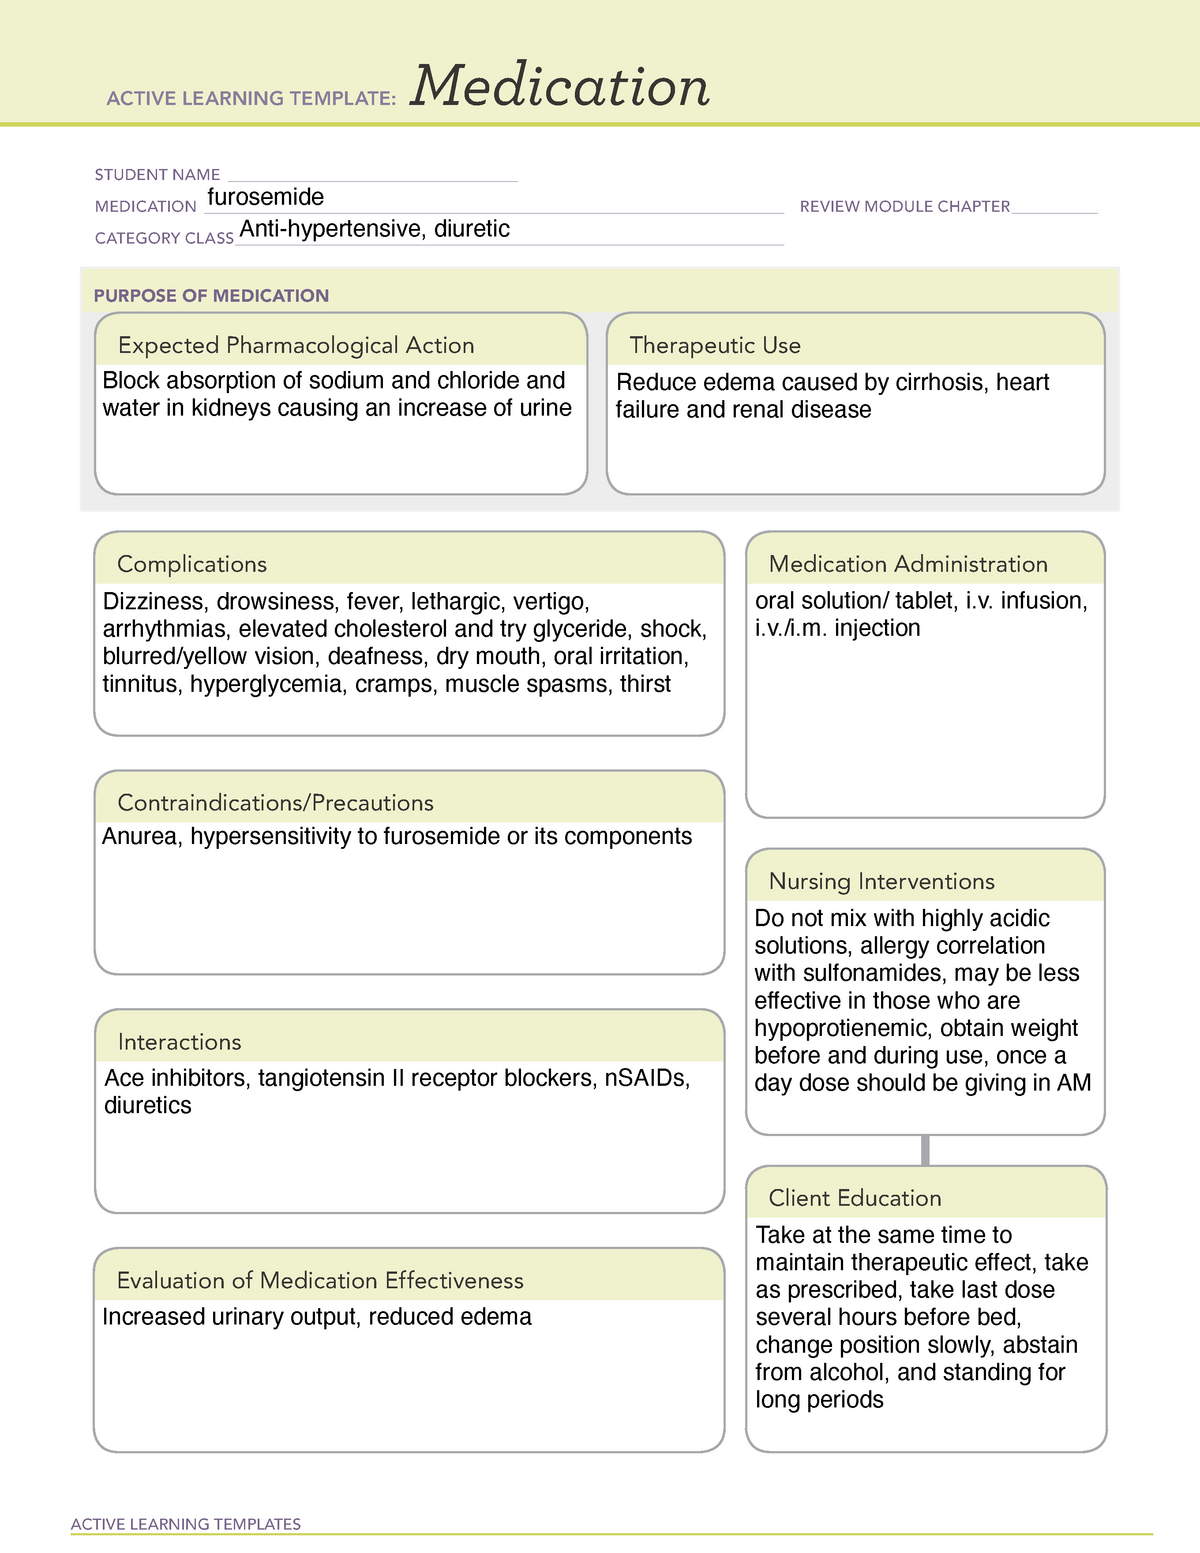 furosemide-medication-template-printable-word-searches